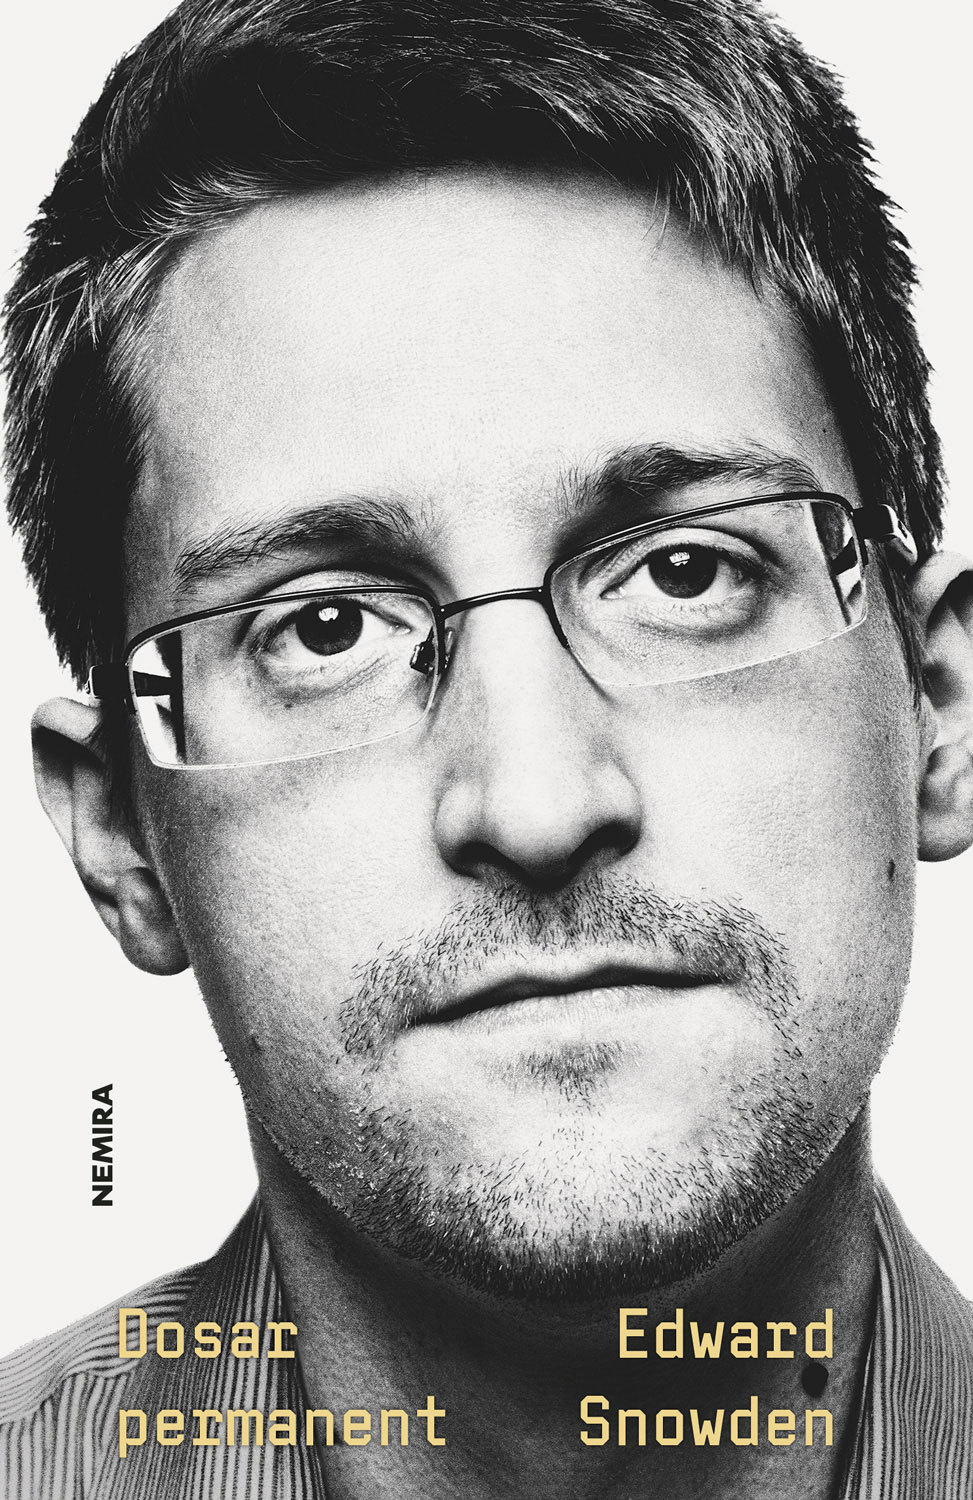 eBook Dosar permanent - Edward Snowden